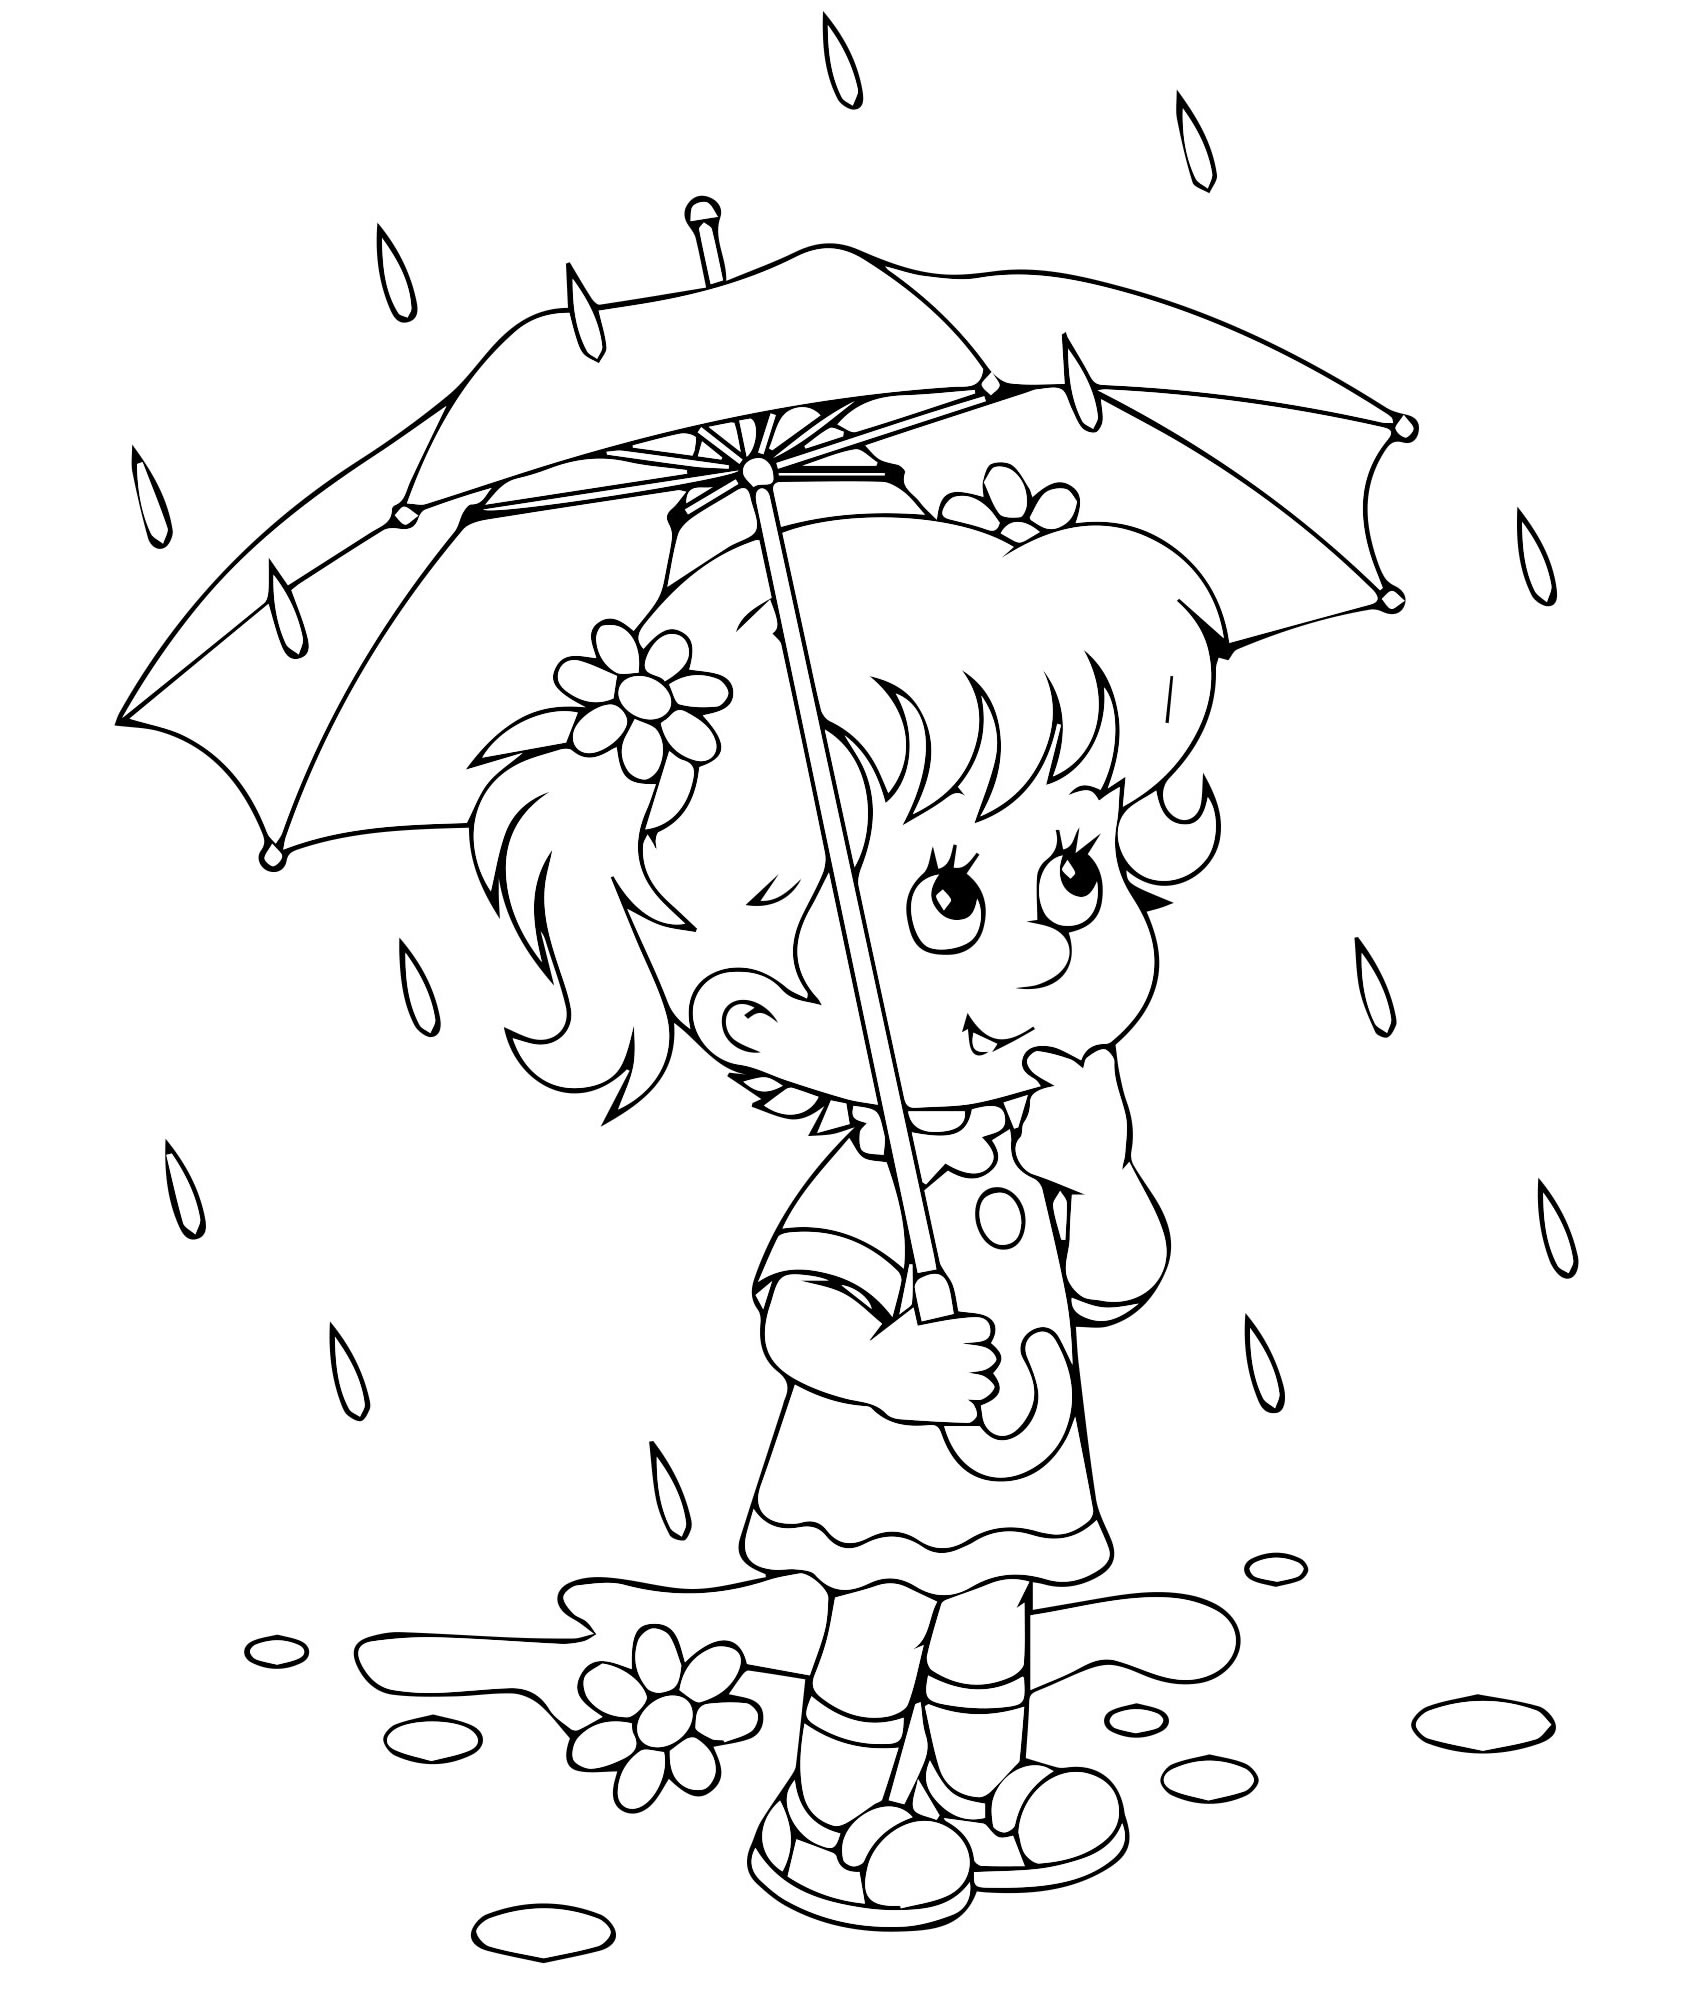 Girl with umbrella #2